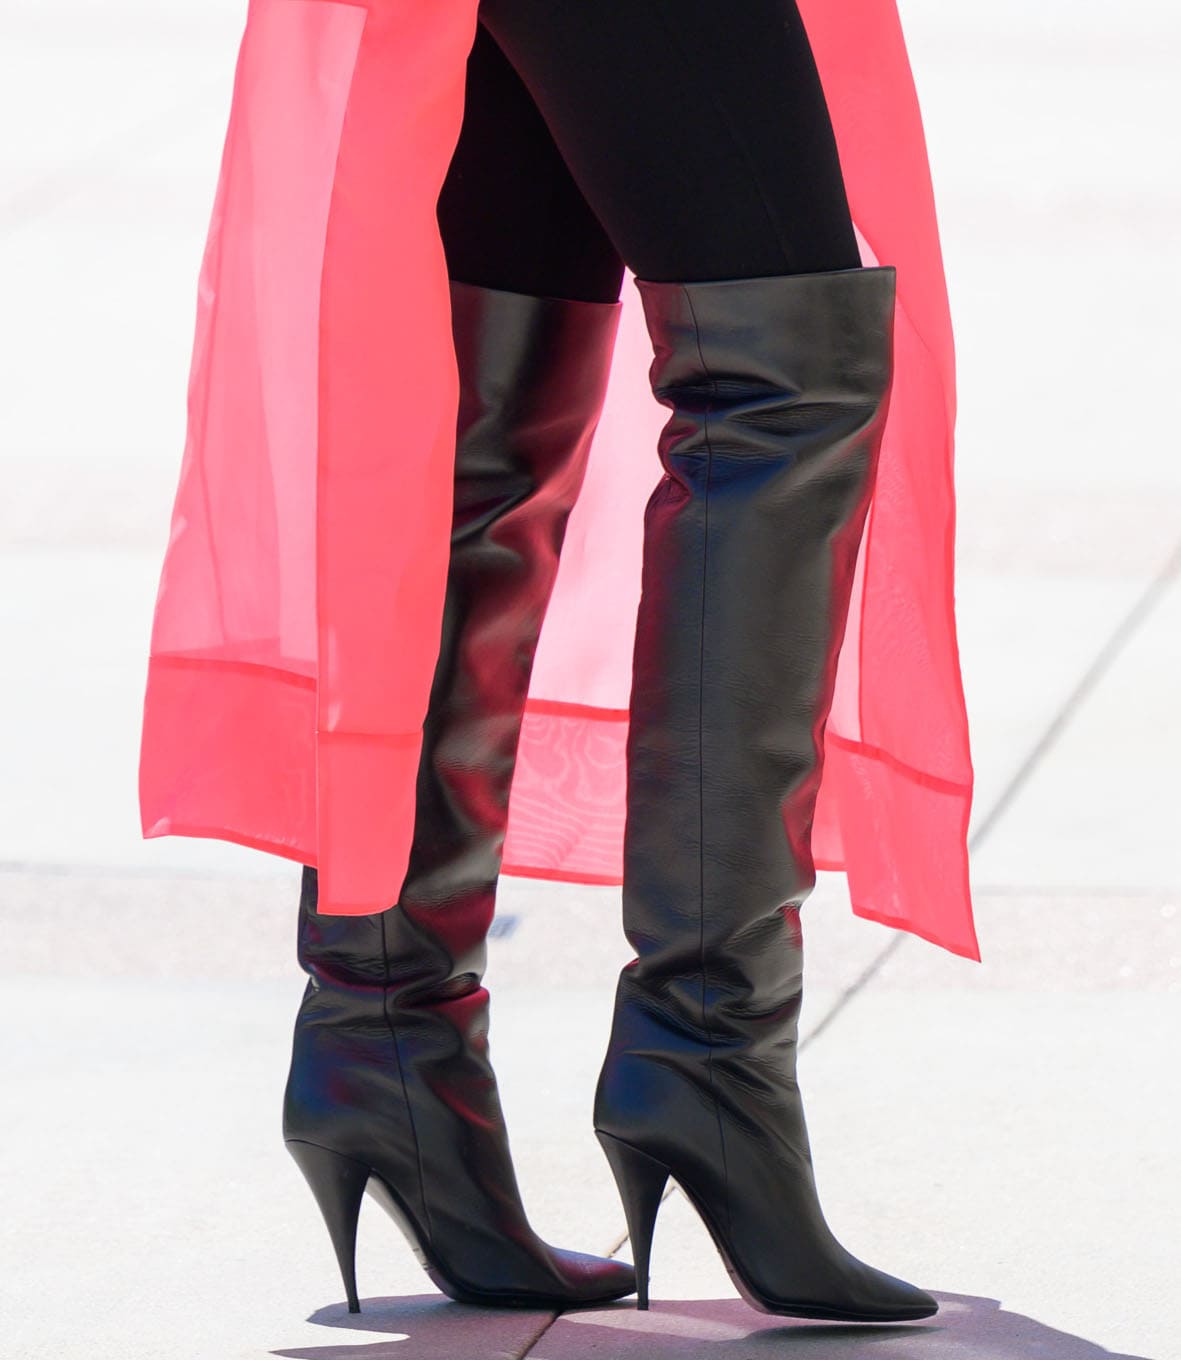 Heidi Klum completes her sleek look with Saint Laurent Kiki over-the-knee boots